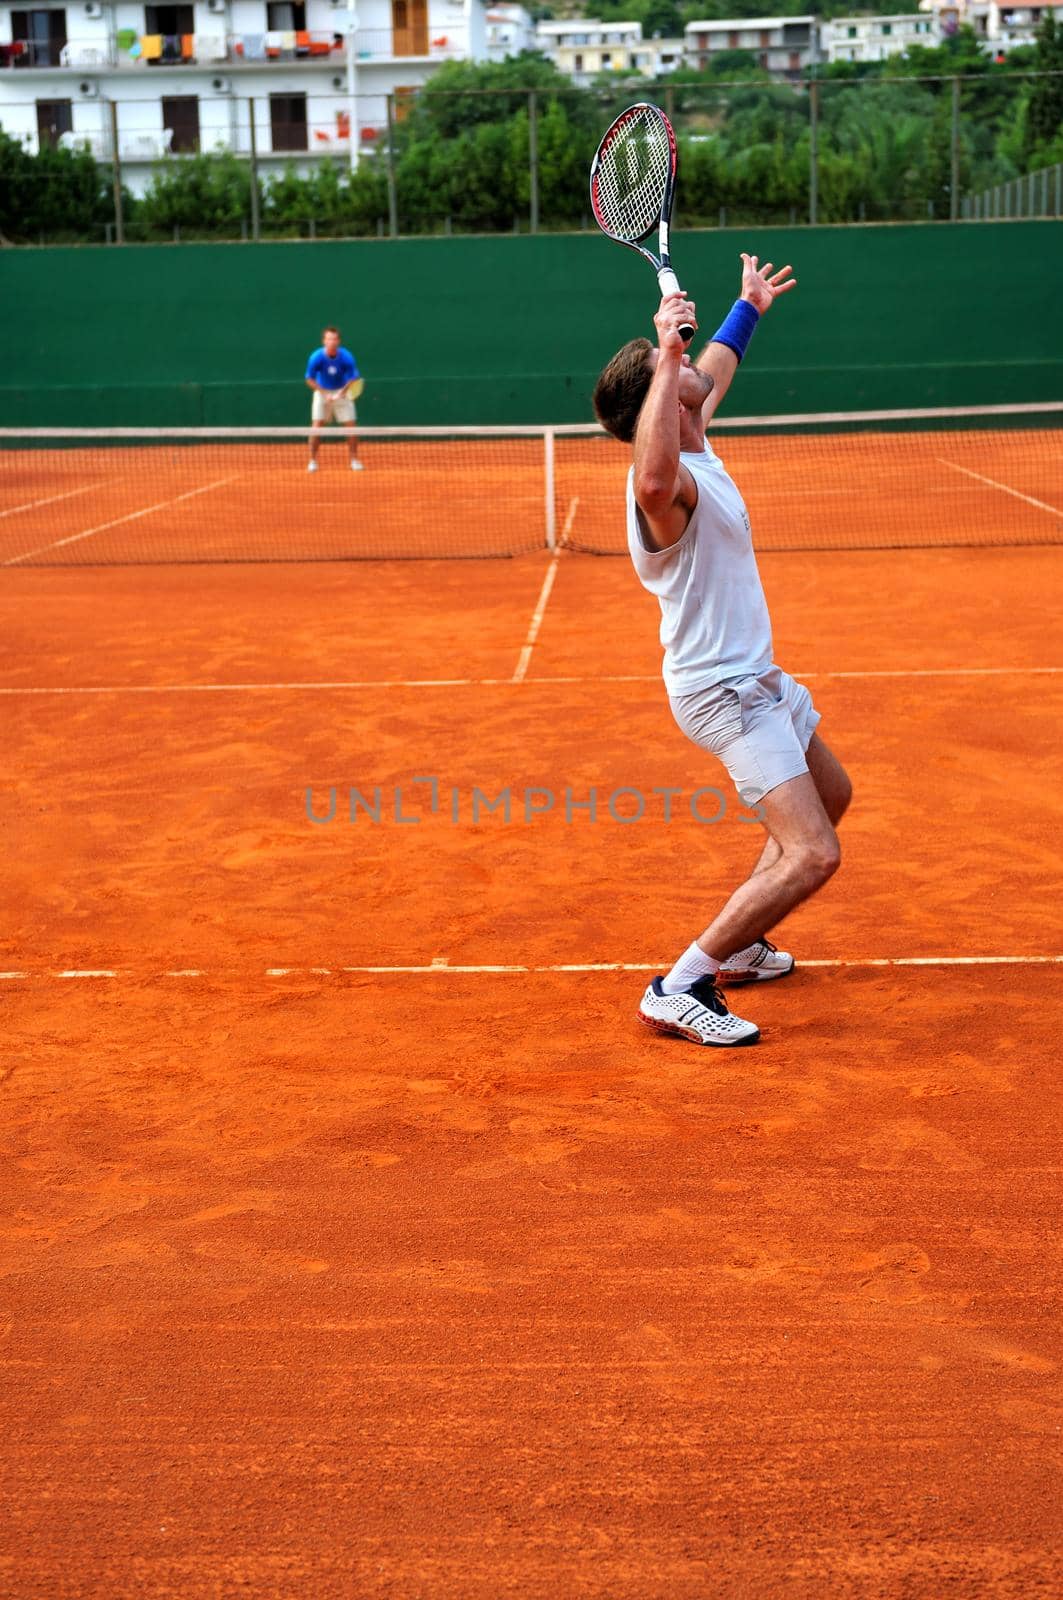 Man plays tennis outdoors by dotshock